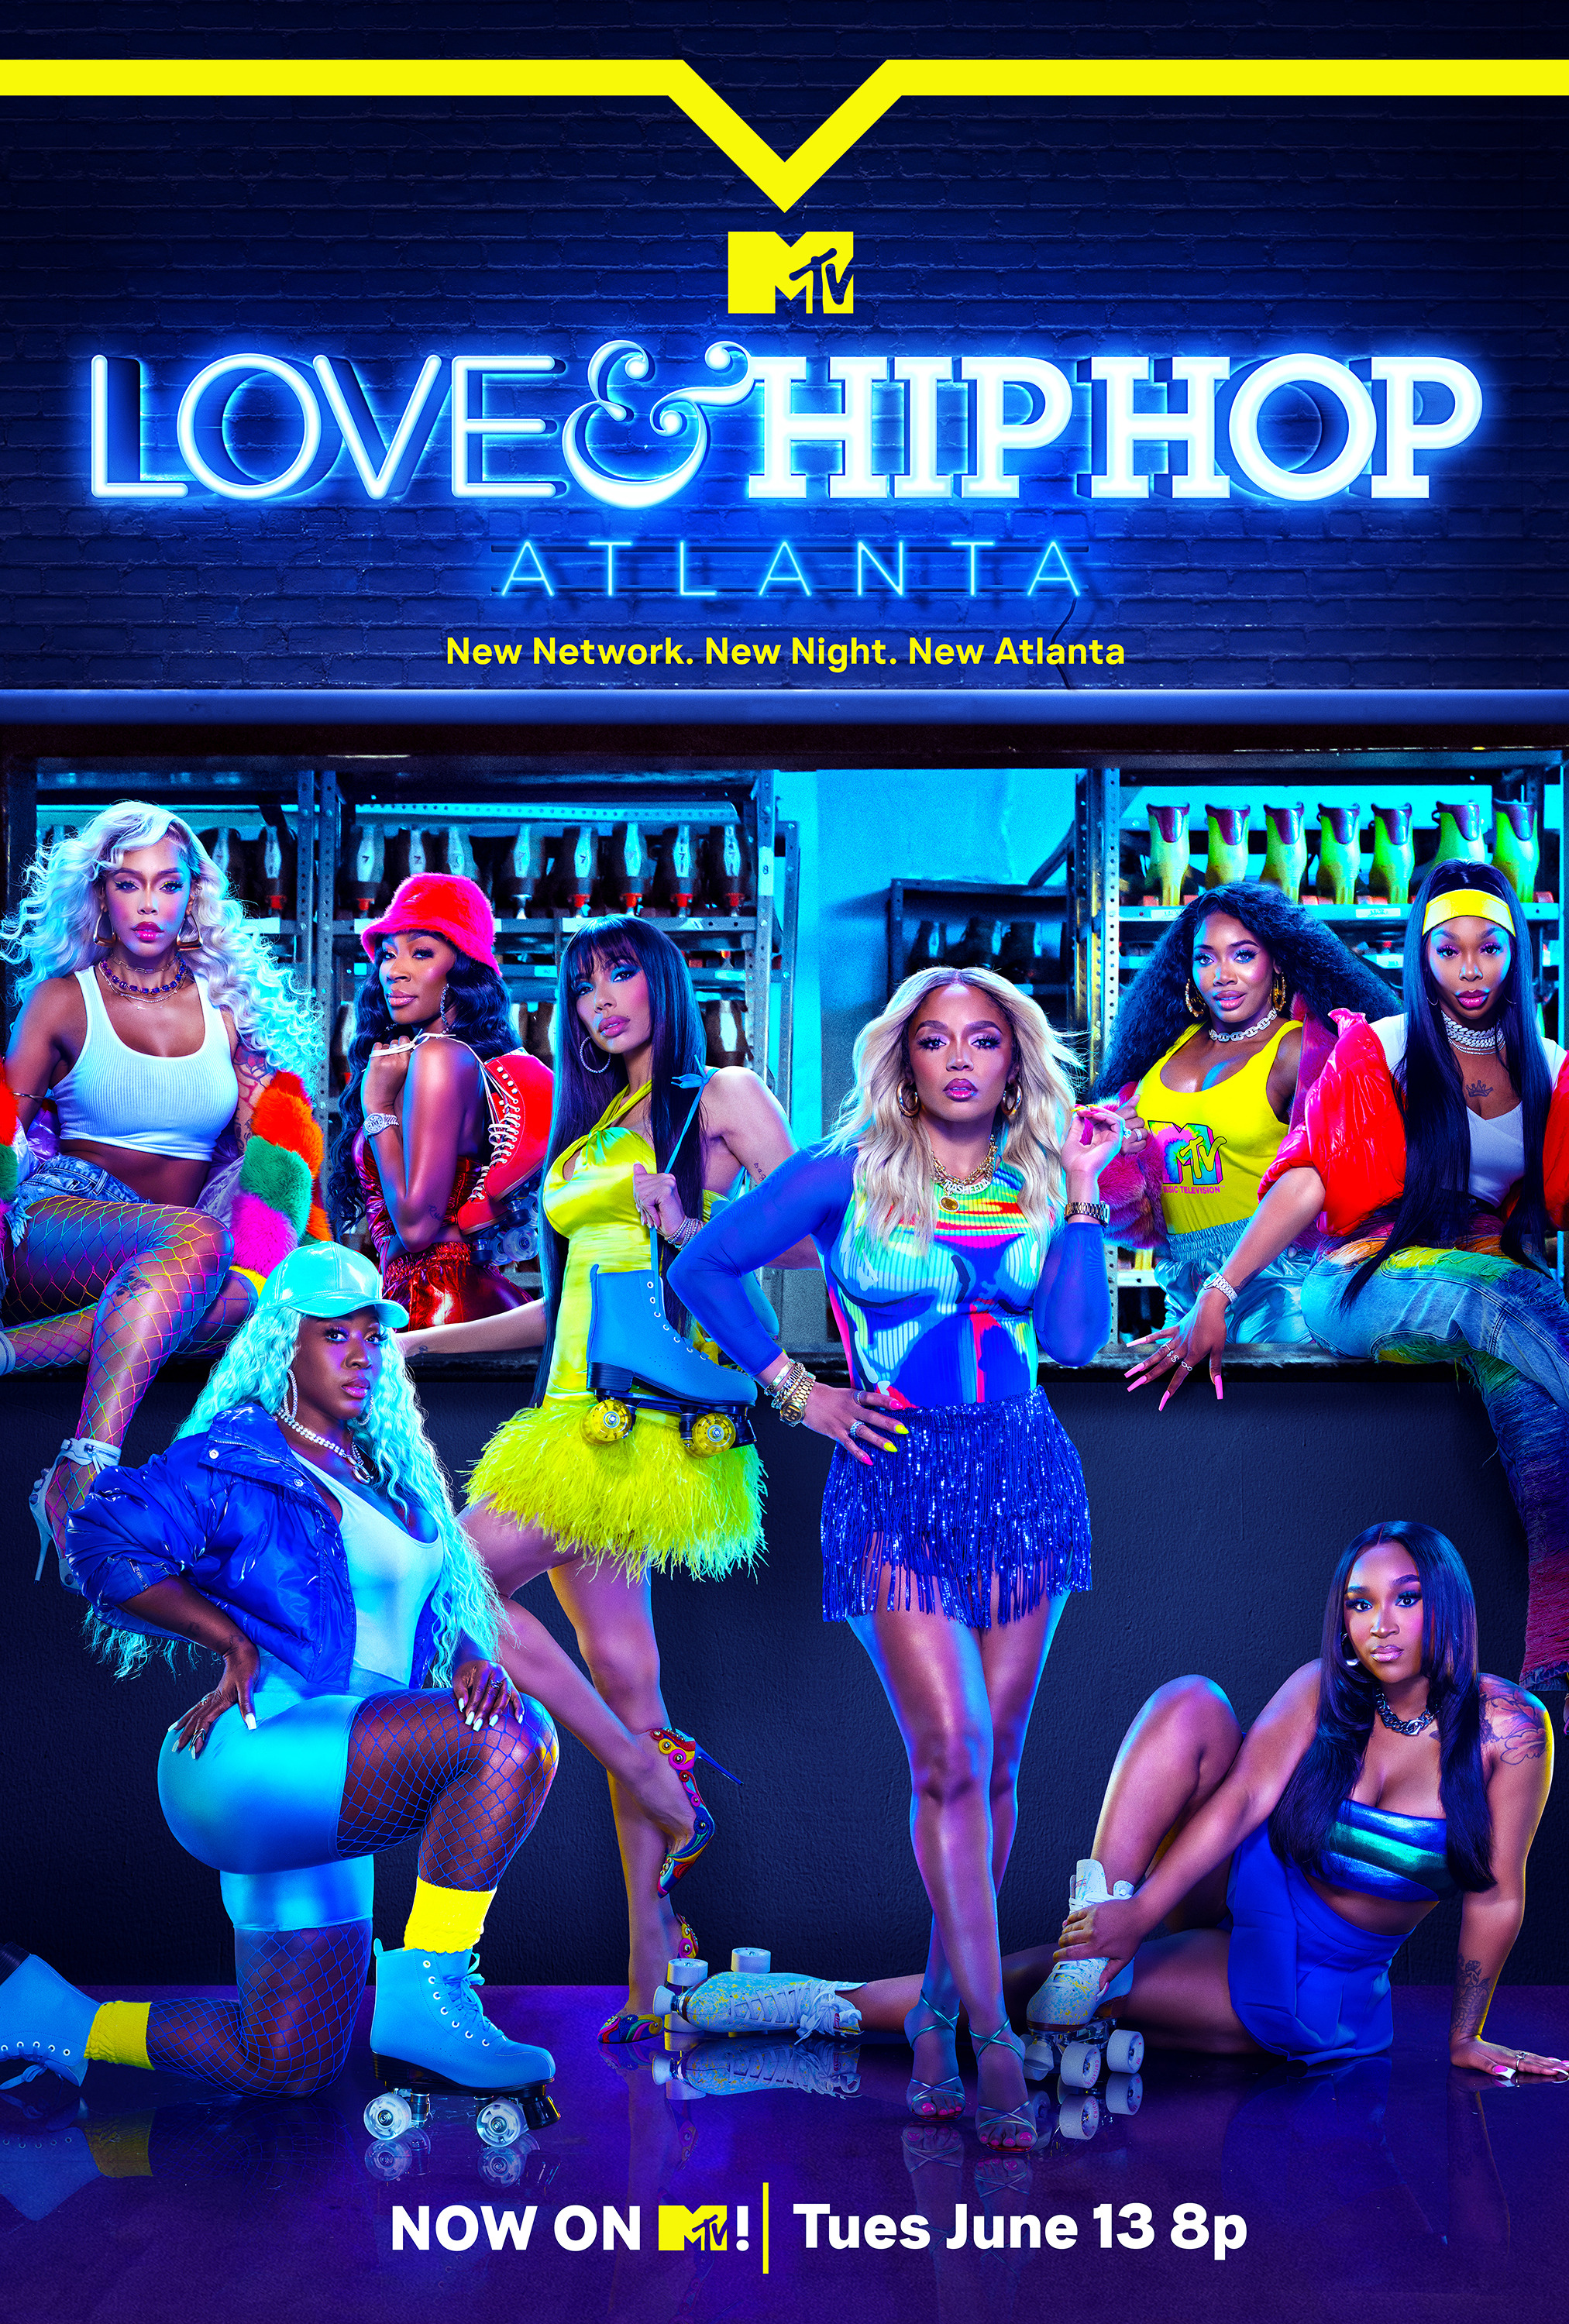 Mega Sized TV Poster Image for Love & Hip Hop: Atlanta (#2 of 2)